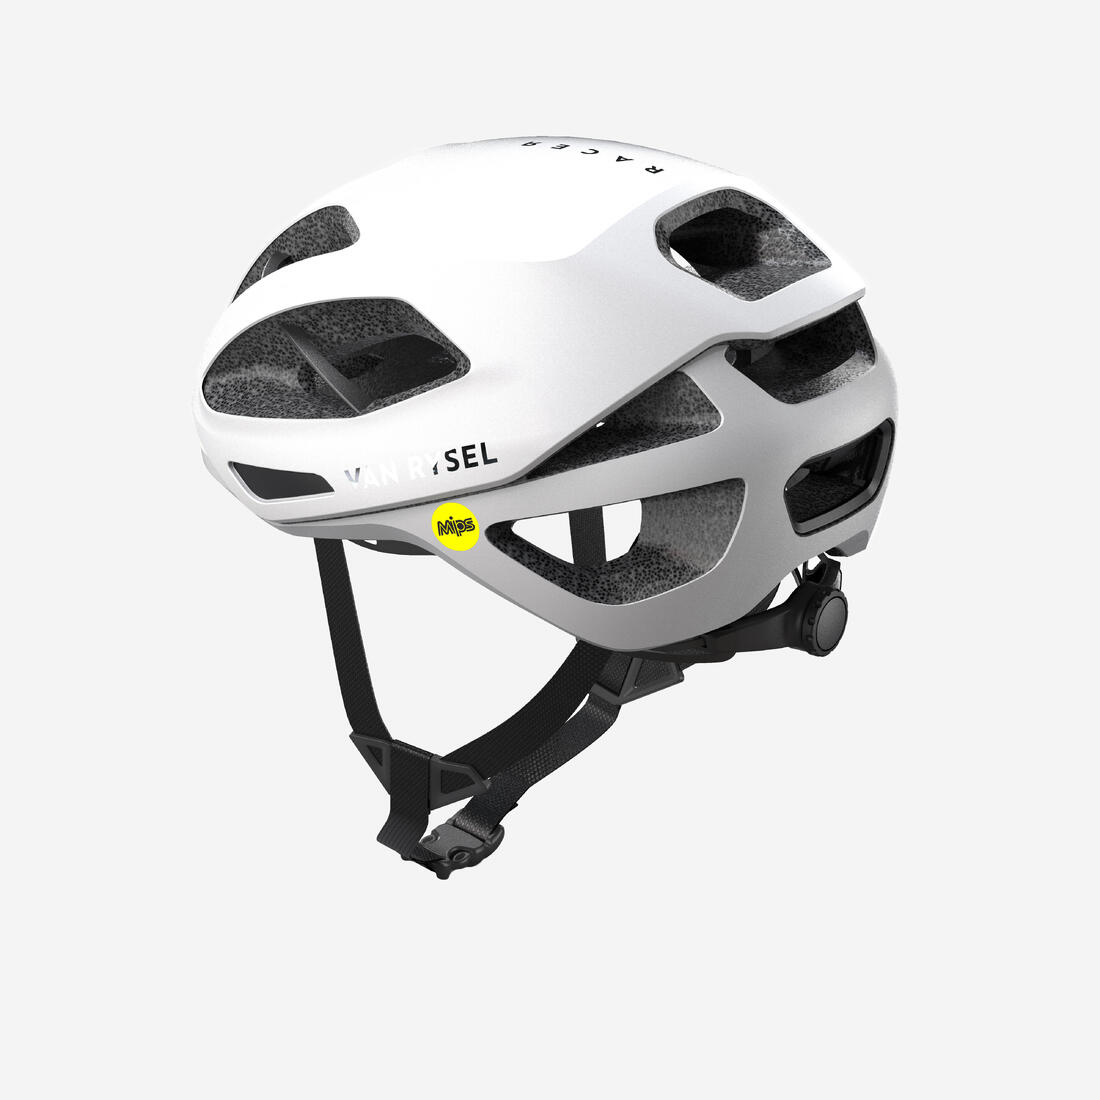 VAN RYSEL (ヴァンリーゼル) サイクリング ロードバイク ヘルメット RCR MIPS